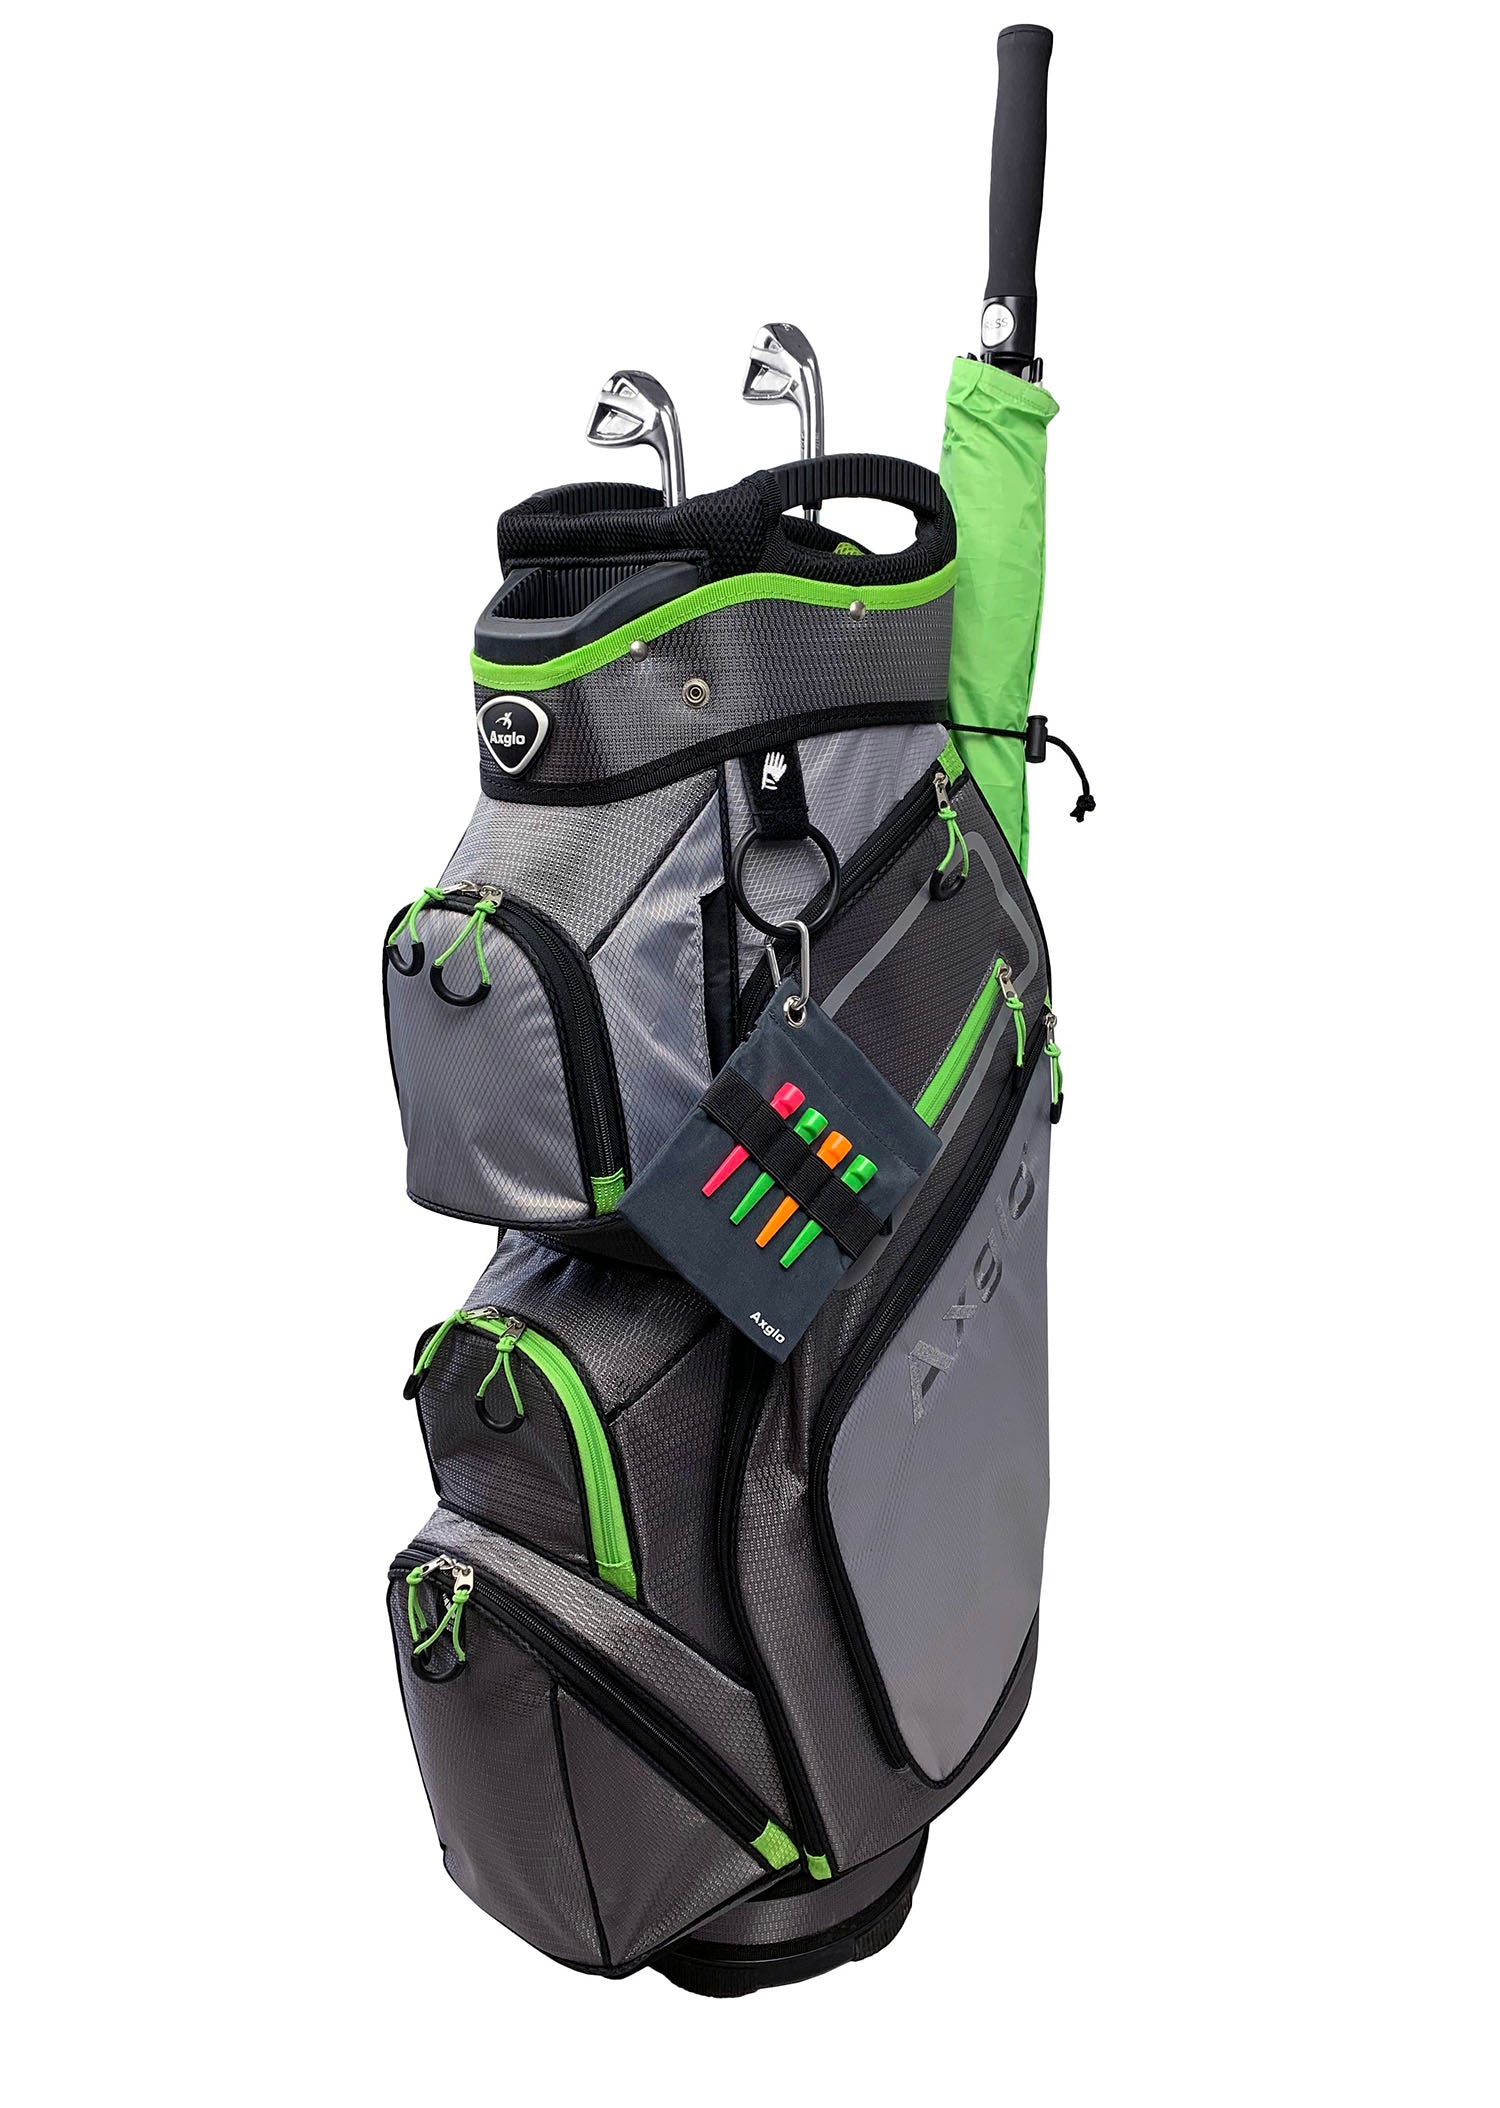 Axglo Golf Cart Bag - Green/Grey with tee bag and umbrella